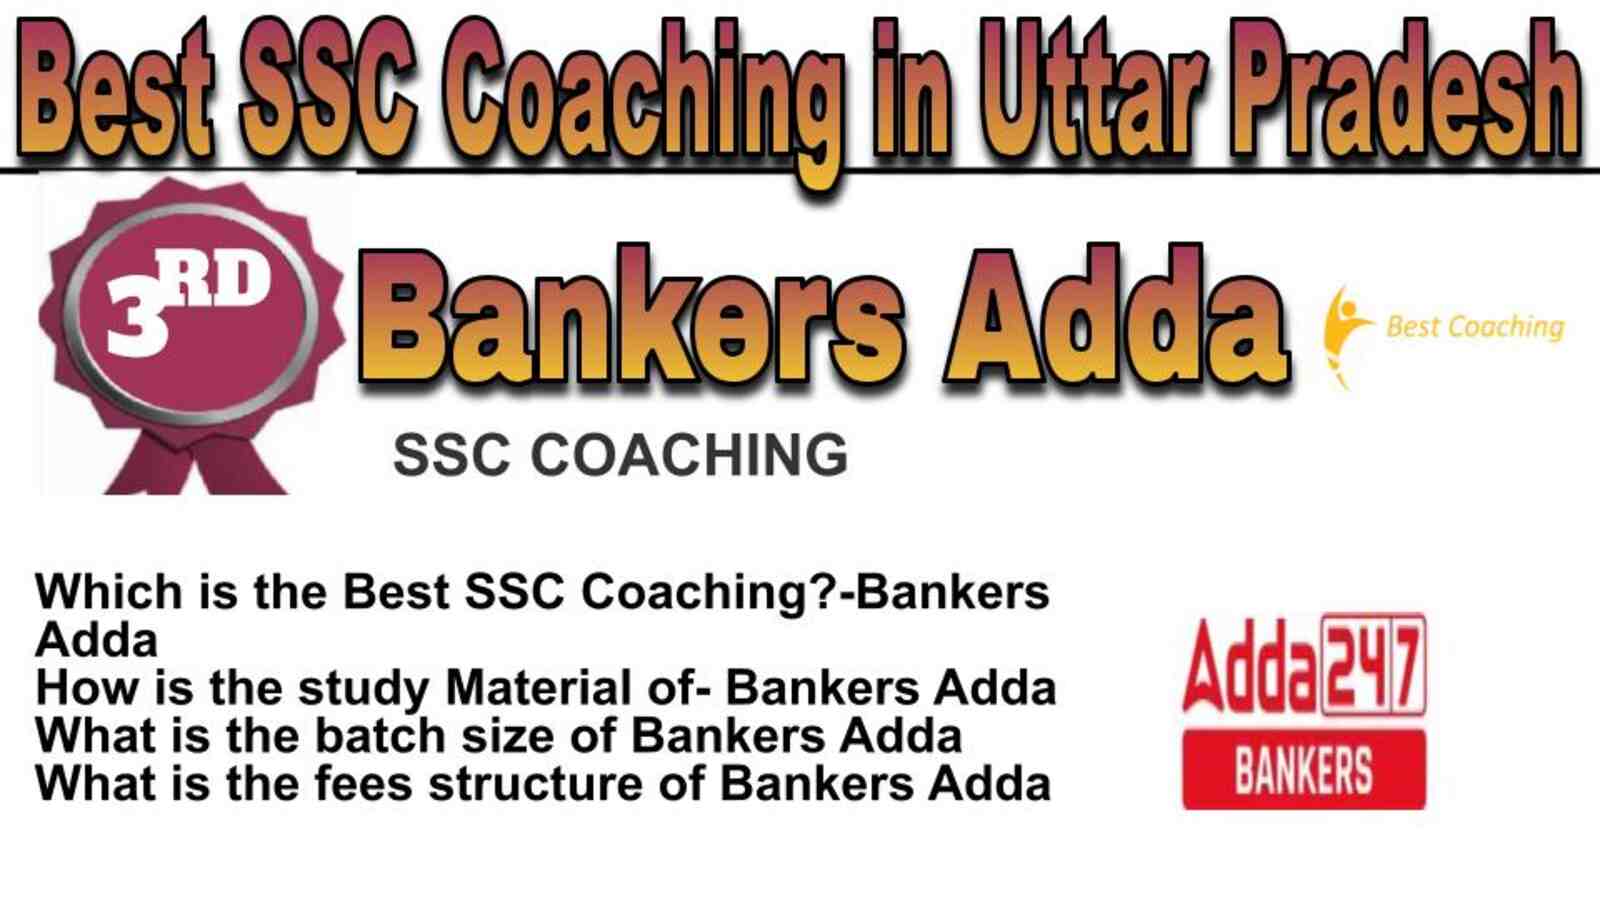 Rank 3 Best SSC Coaching in Uttar Pradesh